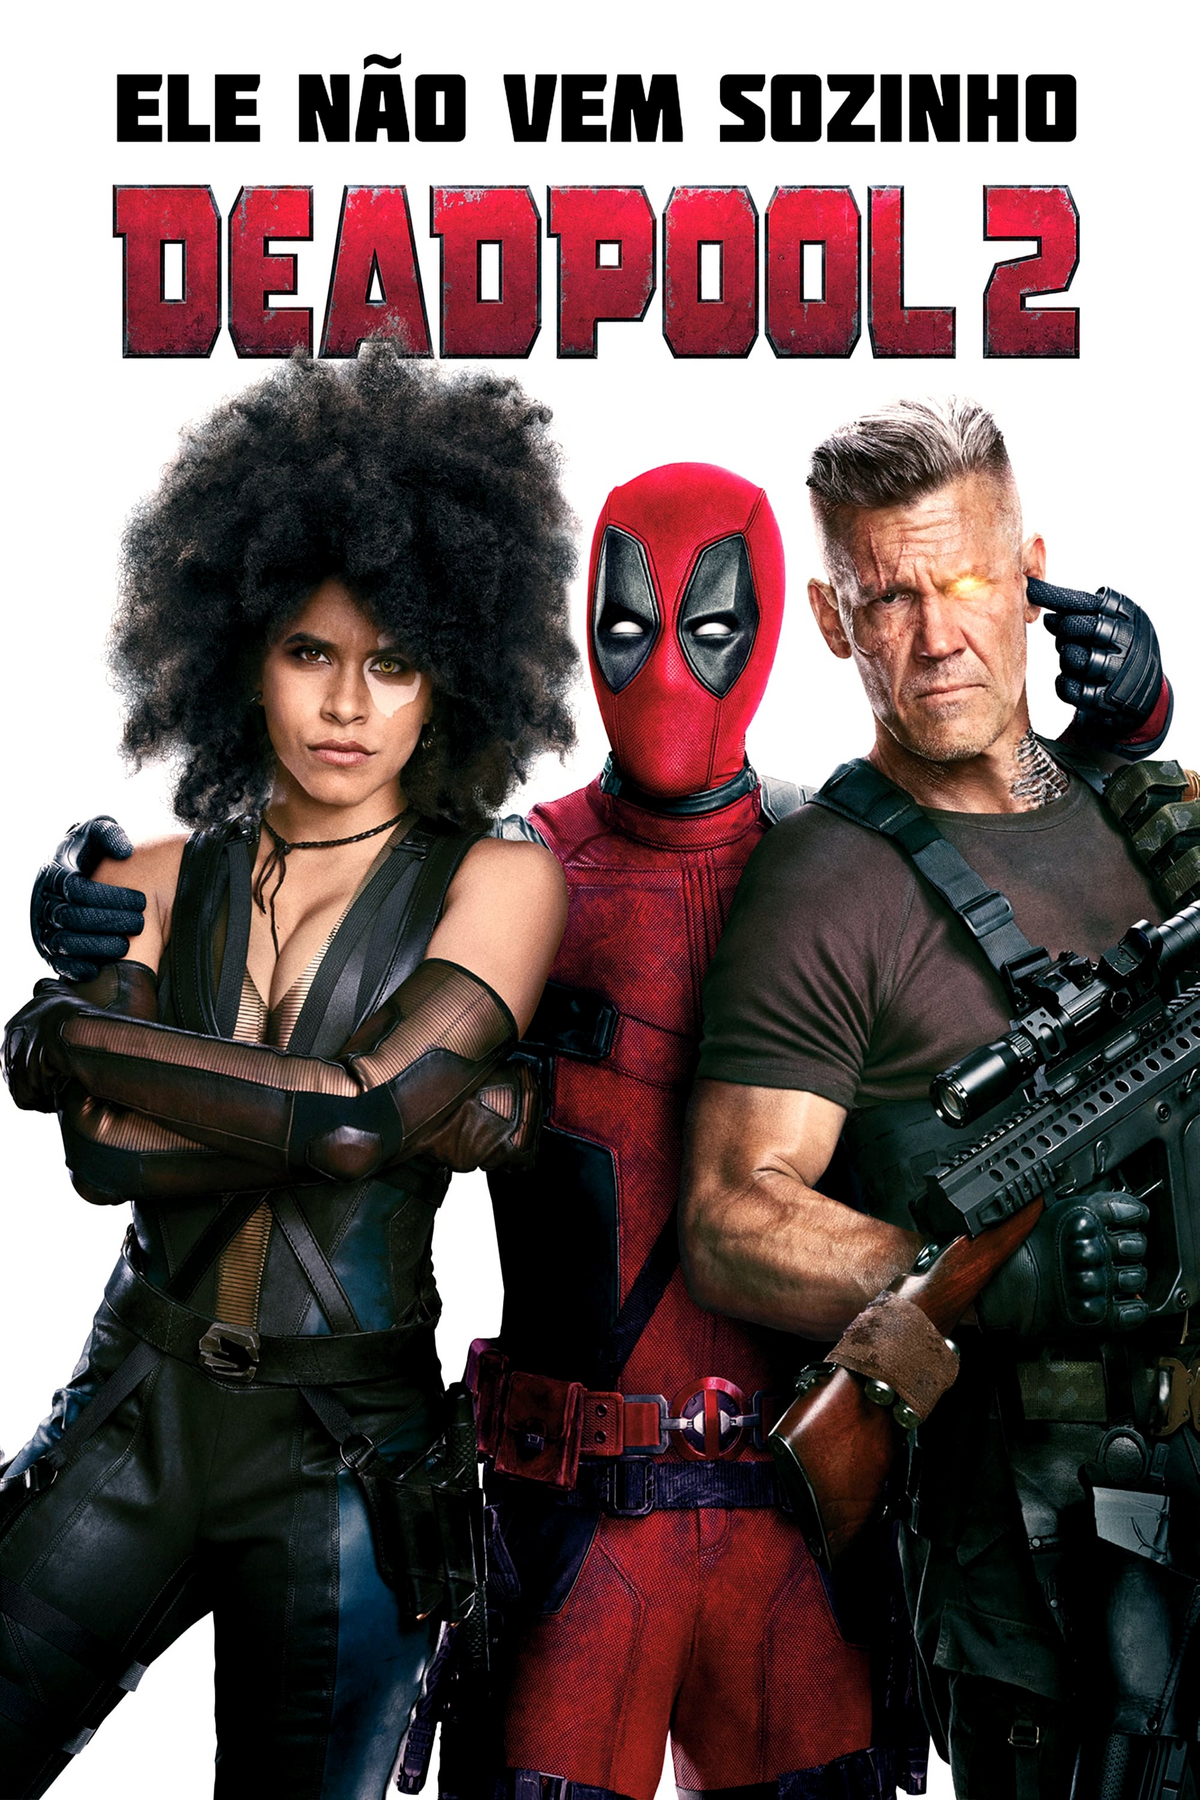 Deadpool 2: elenco, sinopse e onde assistir online - Olhar Digital